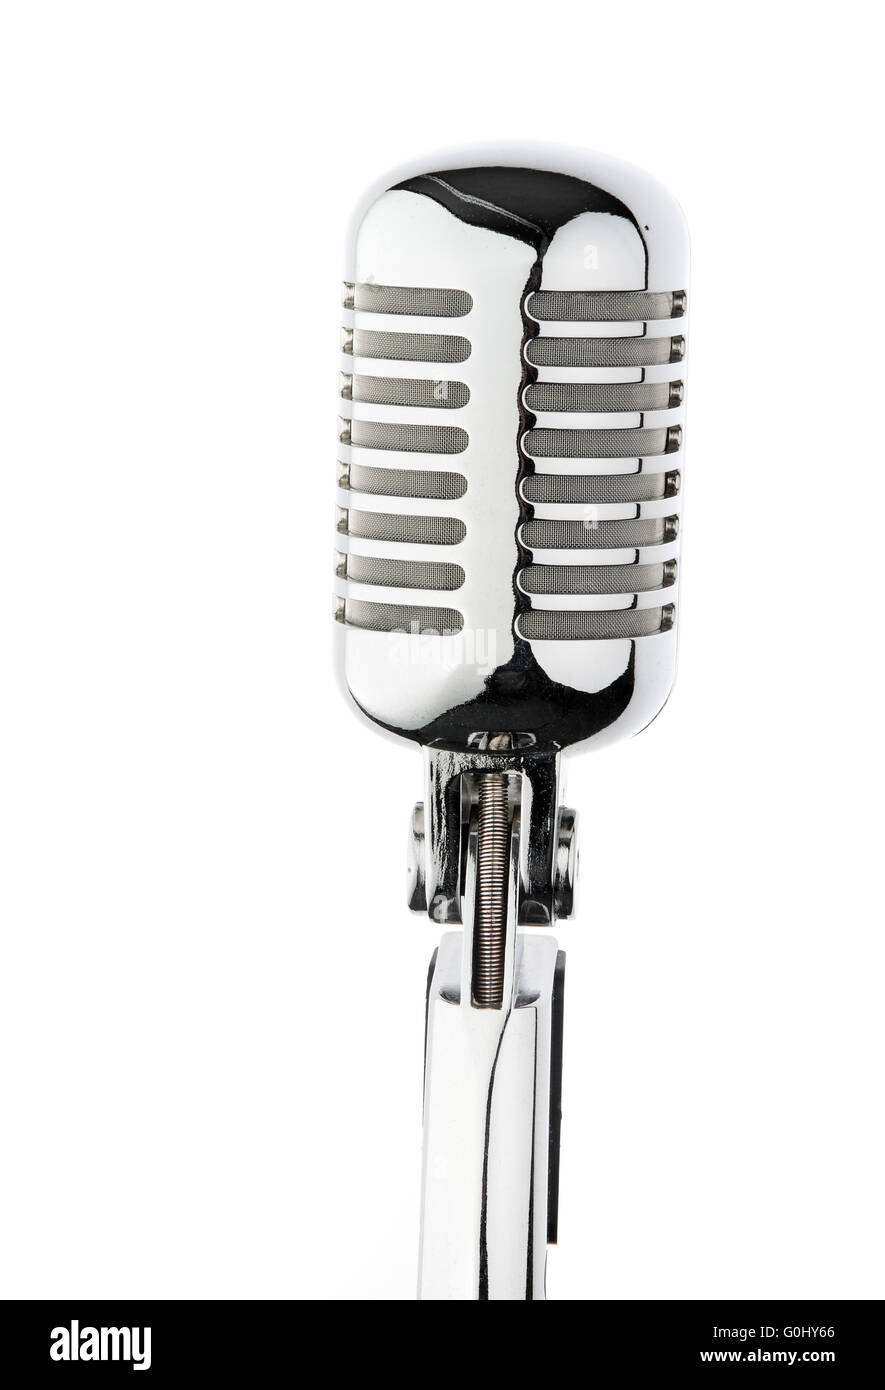 Microphone for speeches, speech, karaoke singing Stock Photo